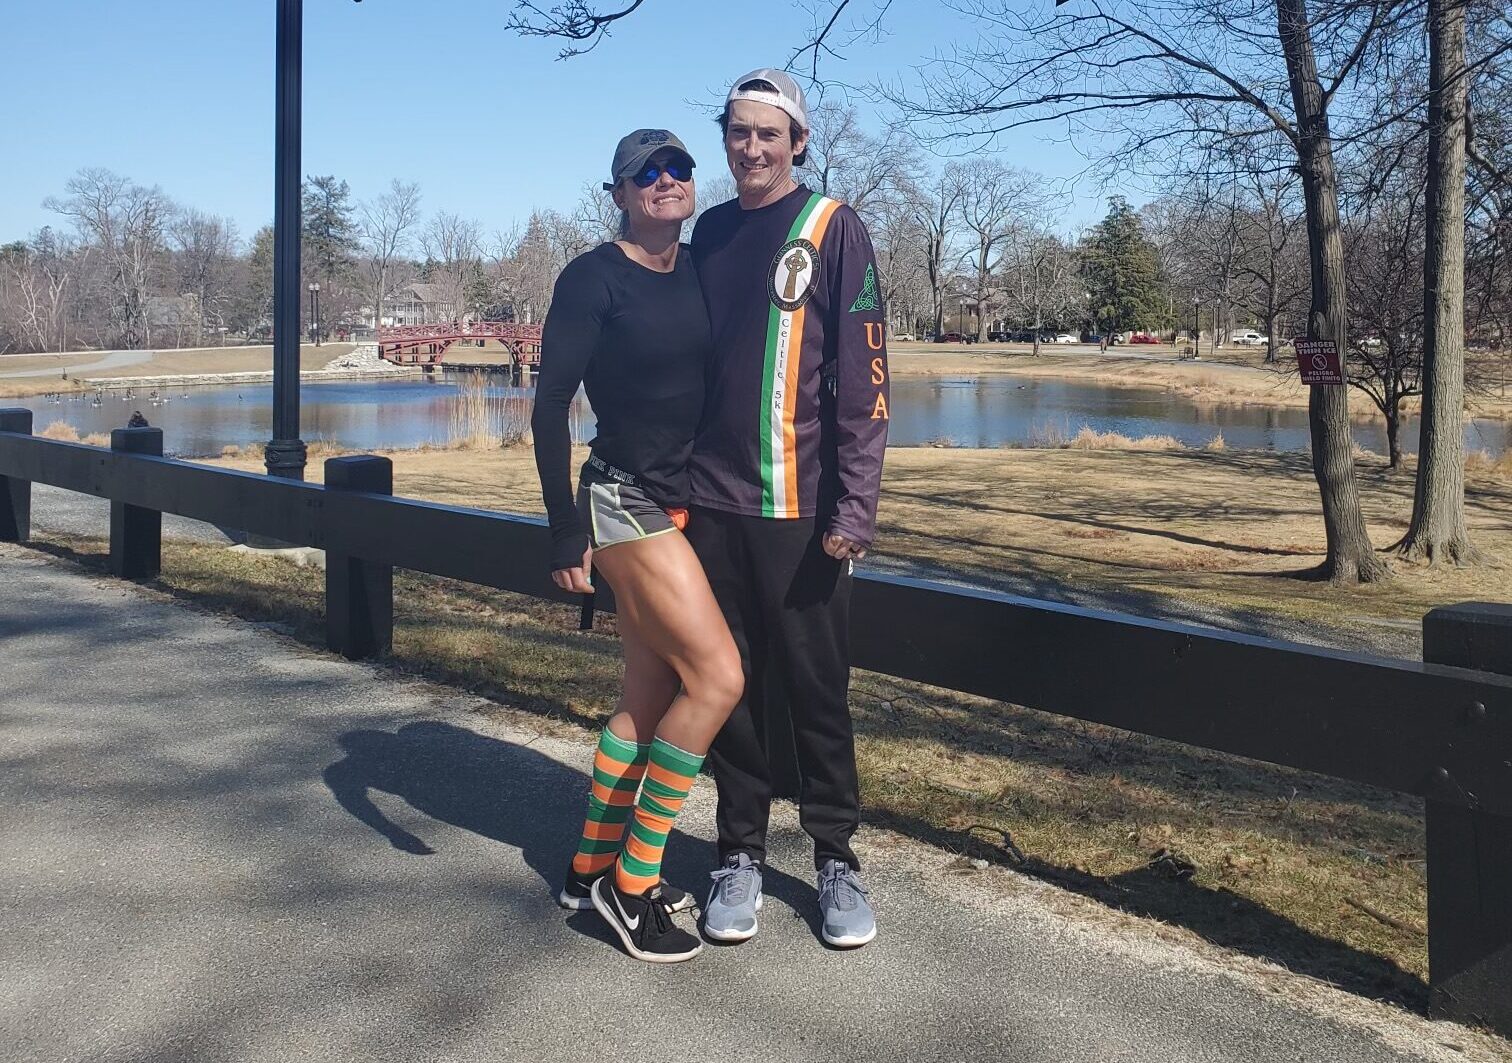 Local couple Amelia, Mike Green overcome long odds to run Boston